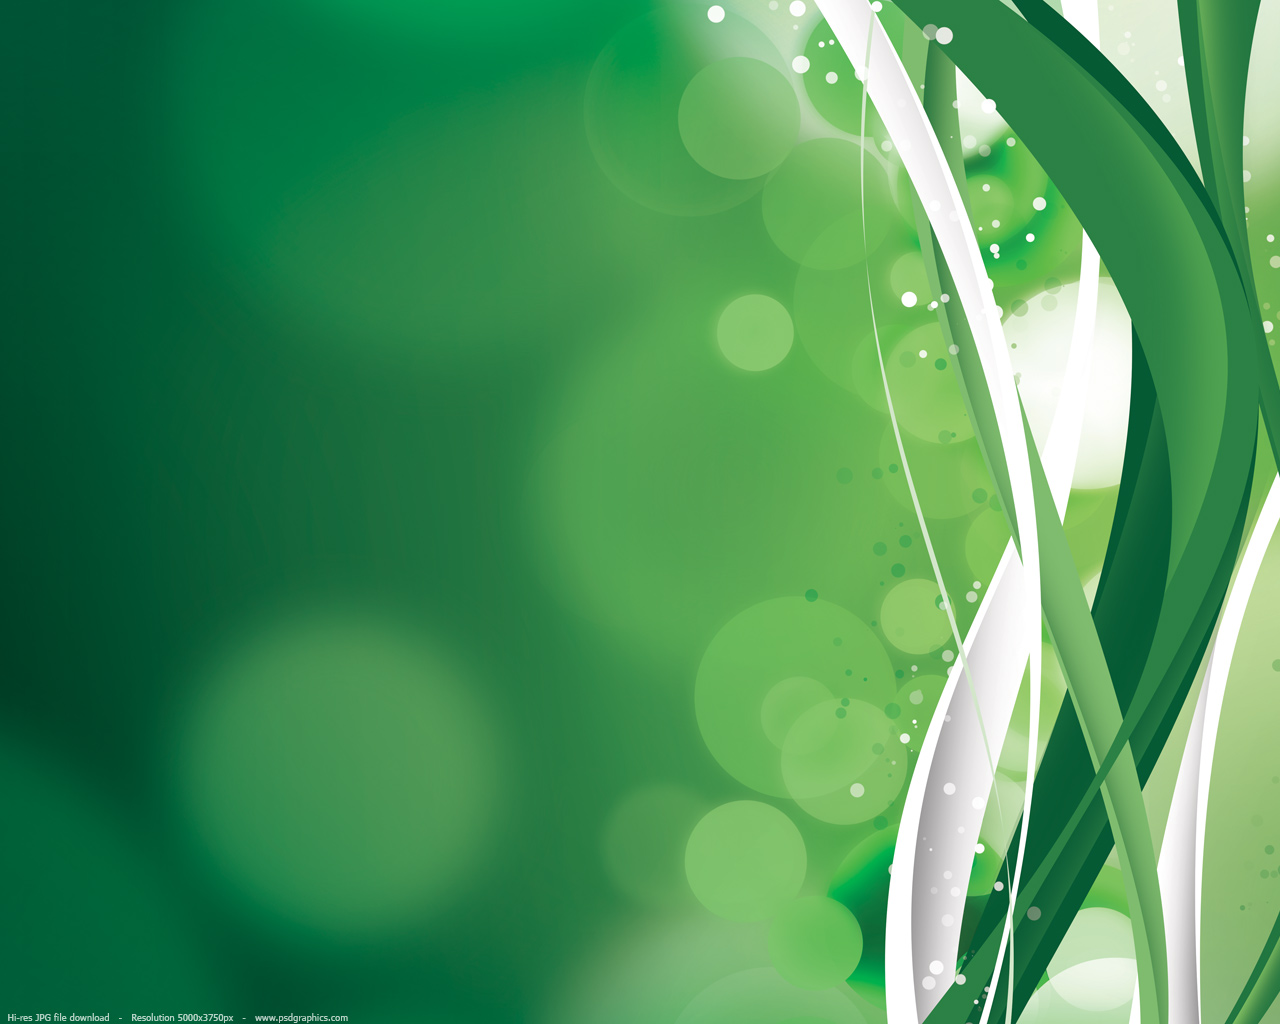 file format jpg color theme green white keywords green living design 1280x1024